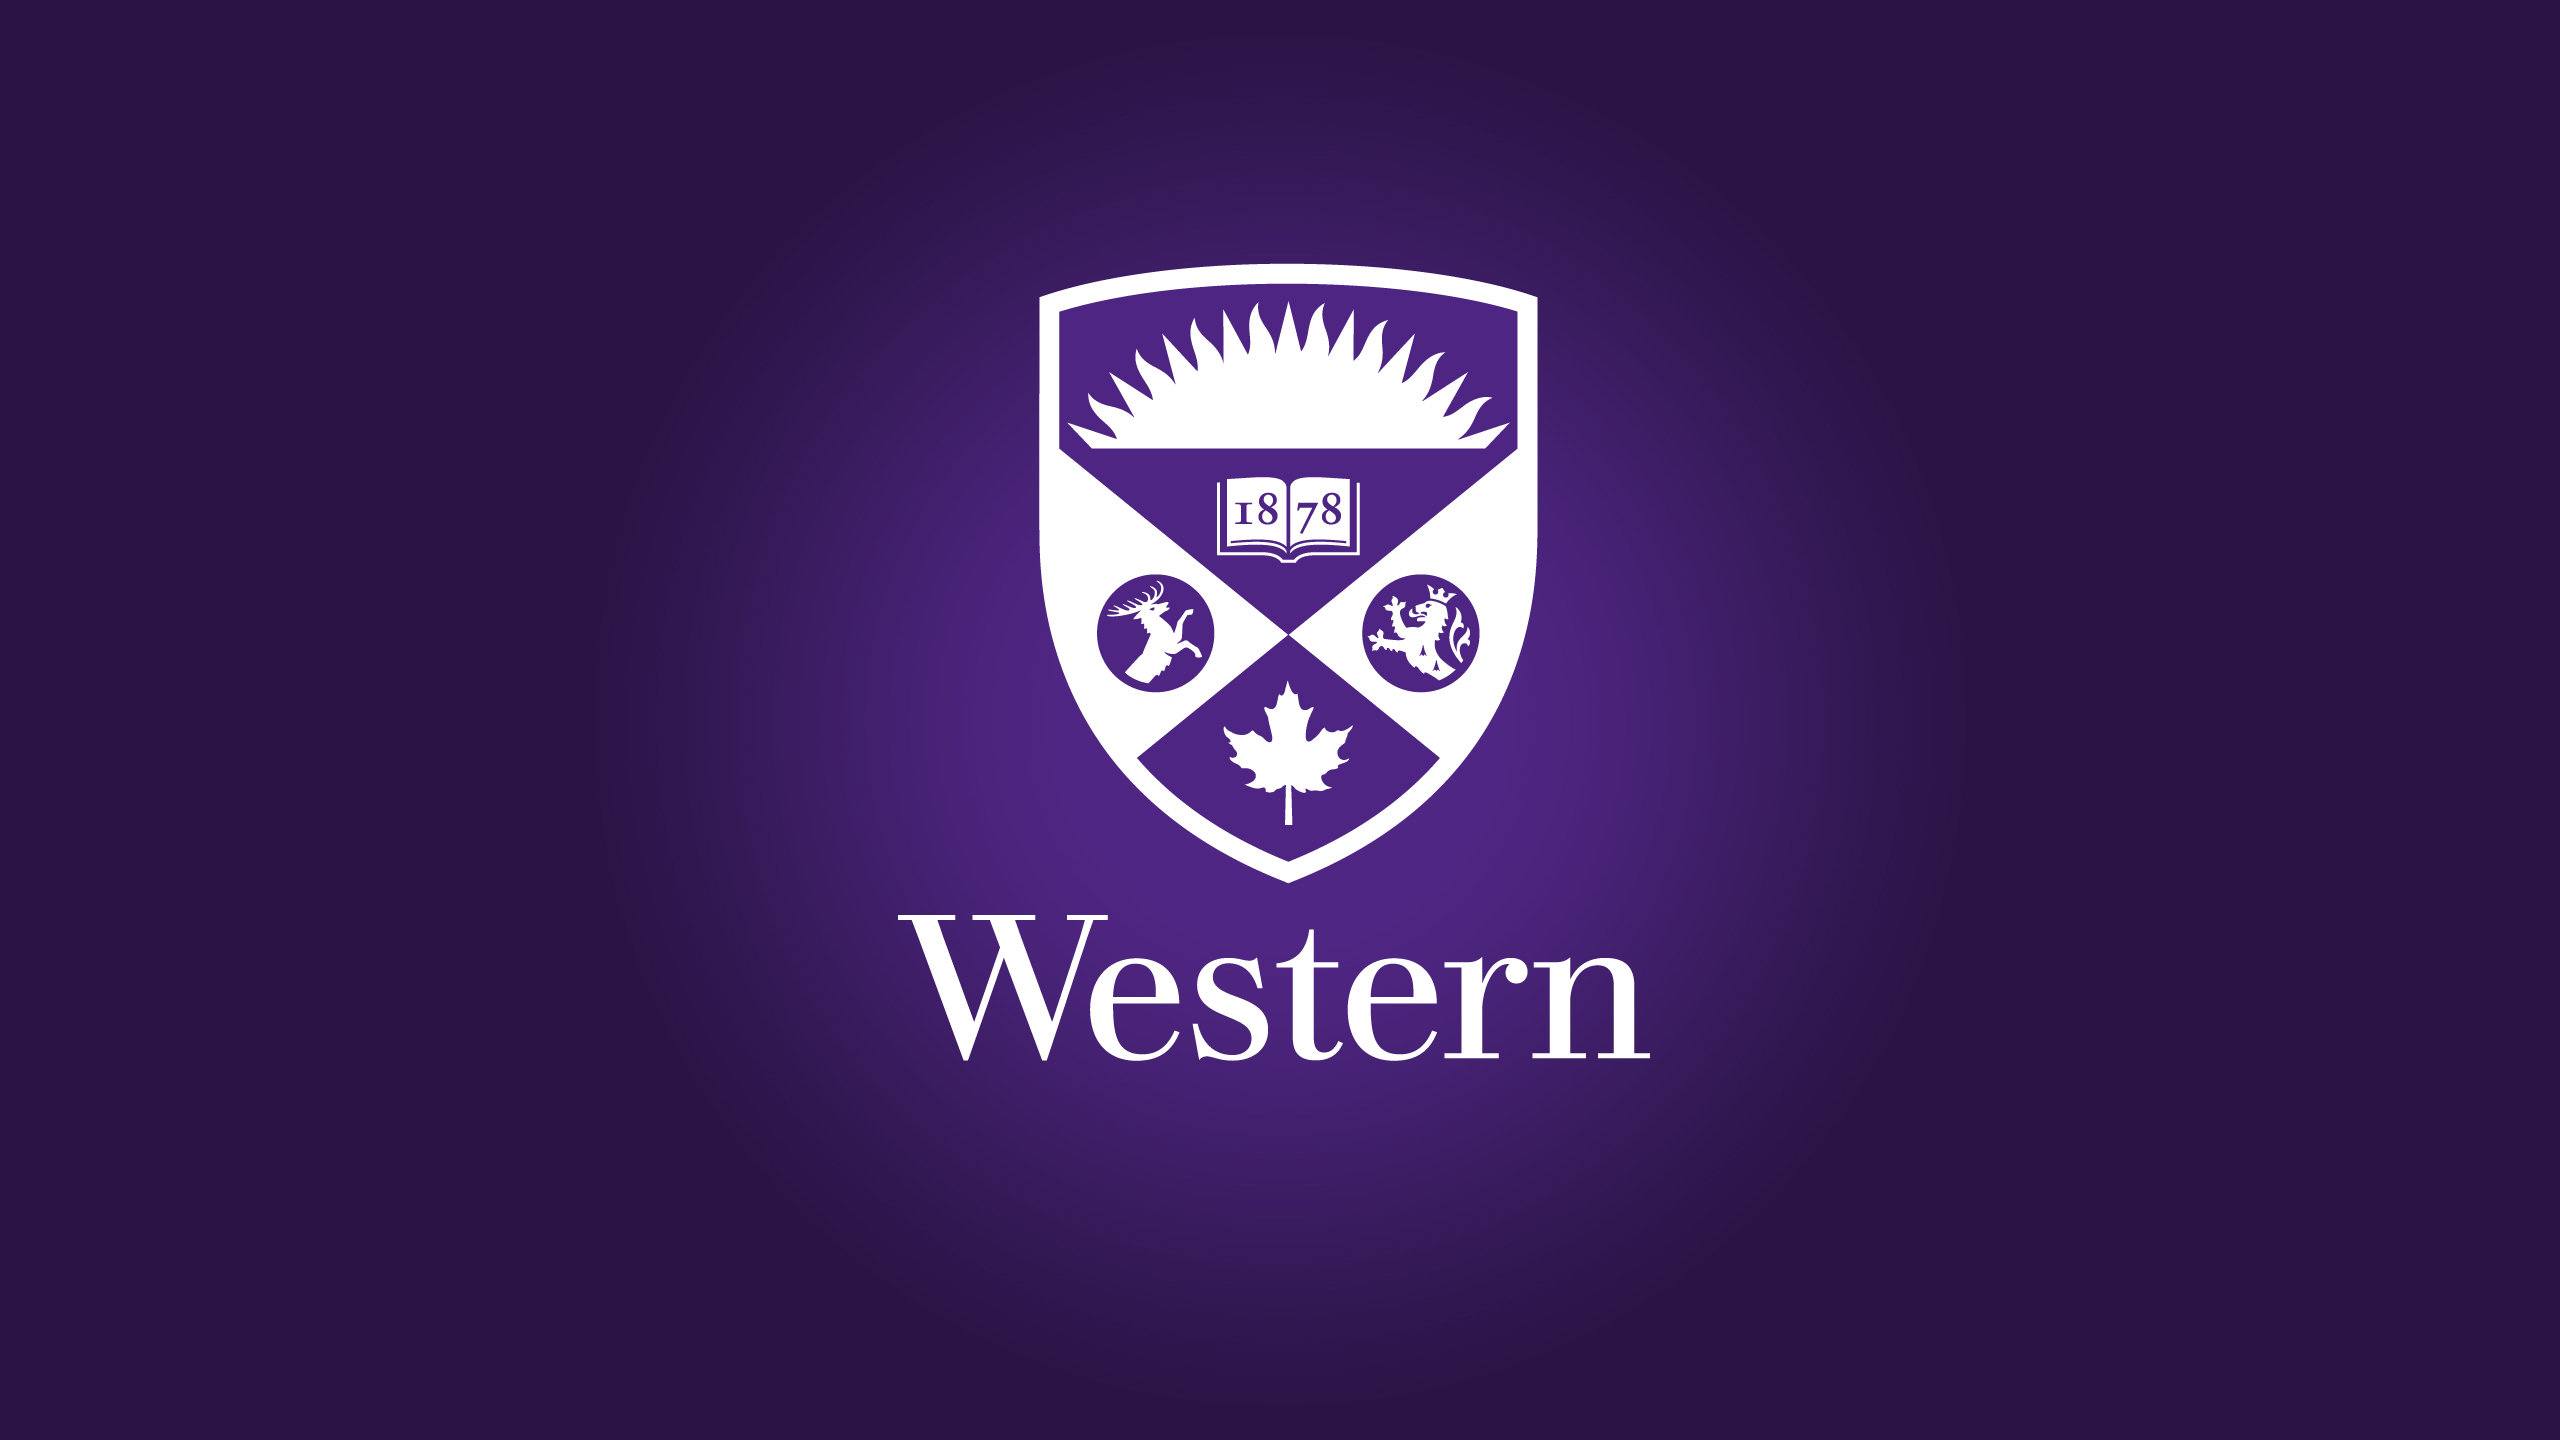 University of Western Ontario (Western University)